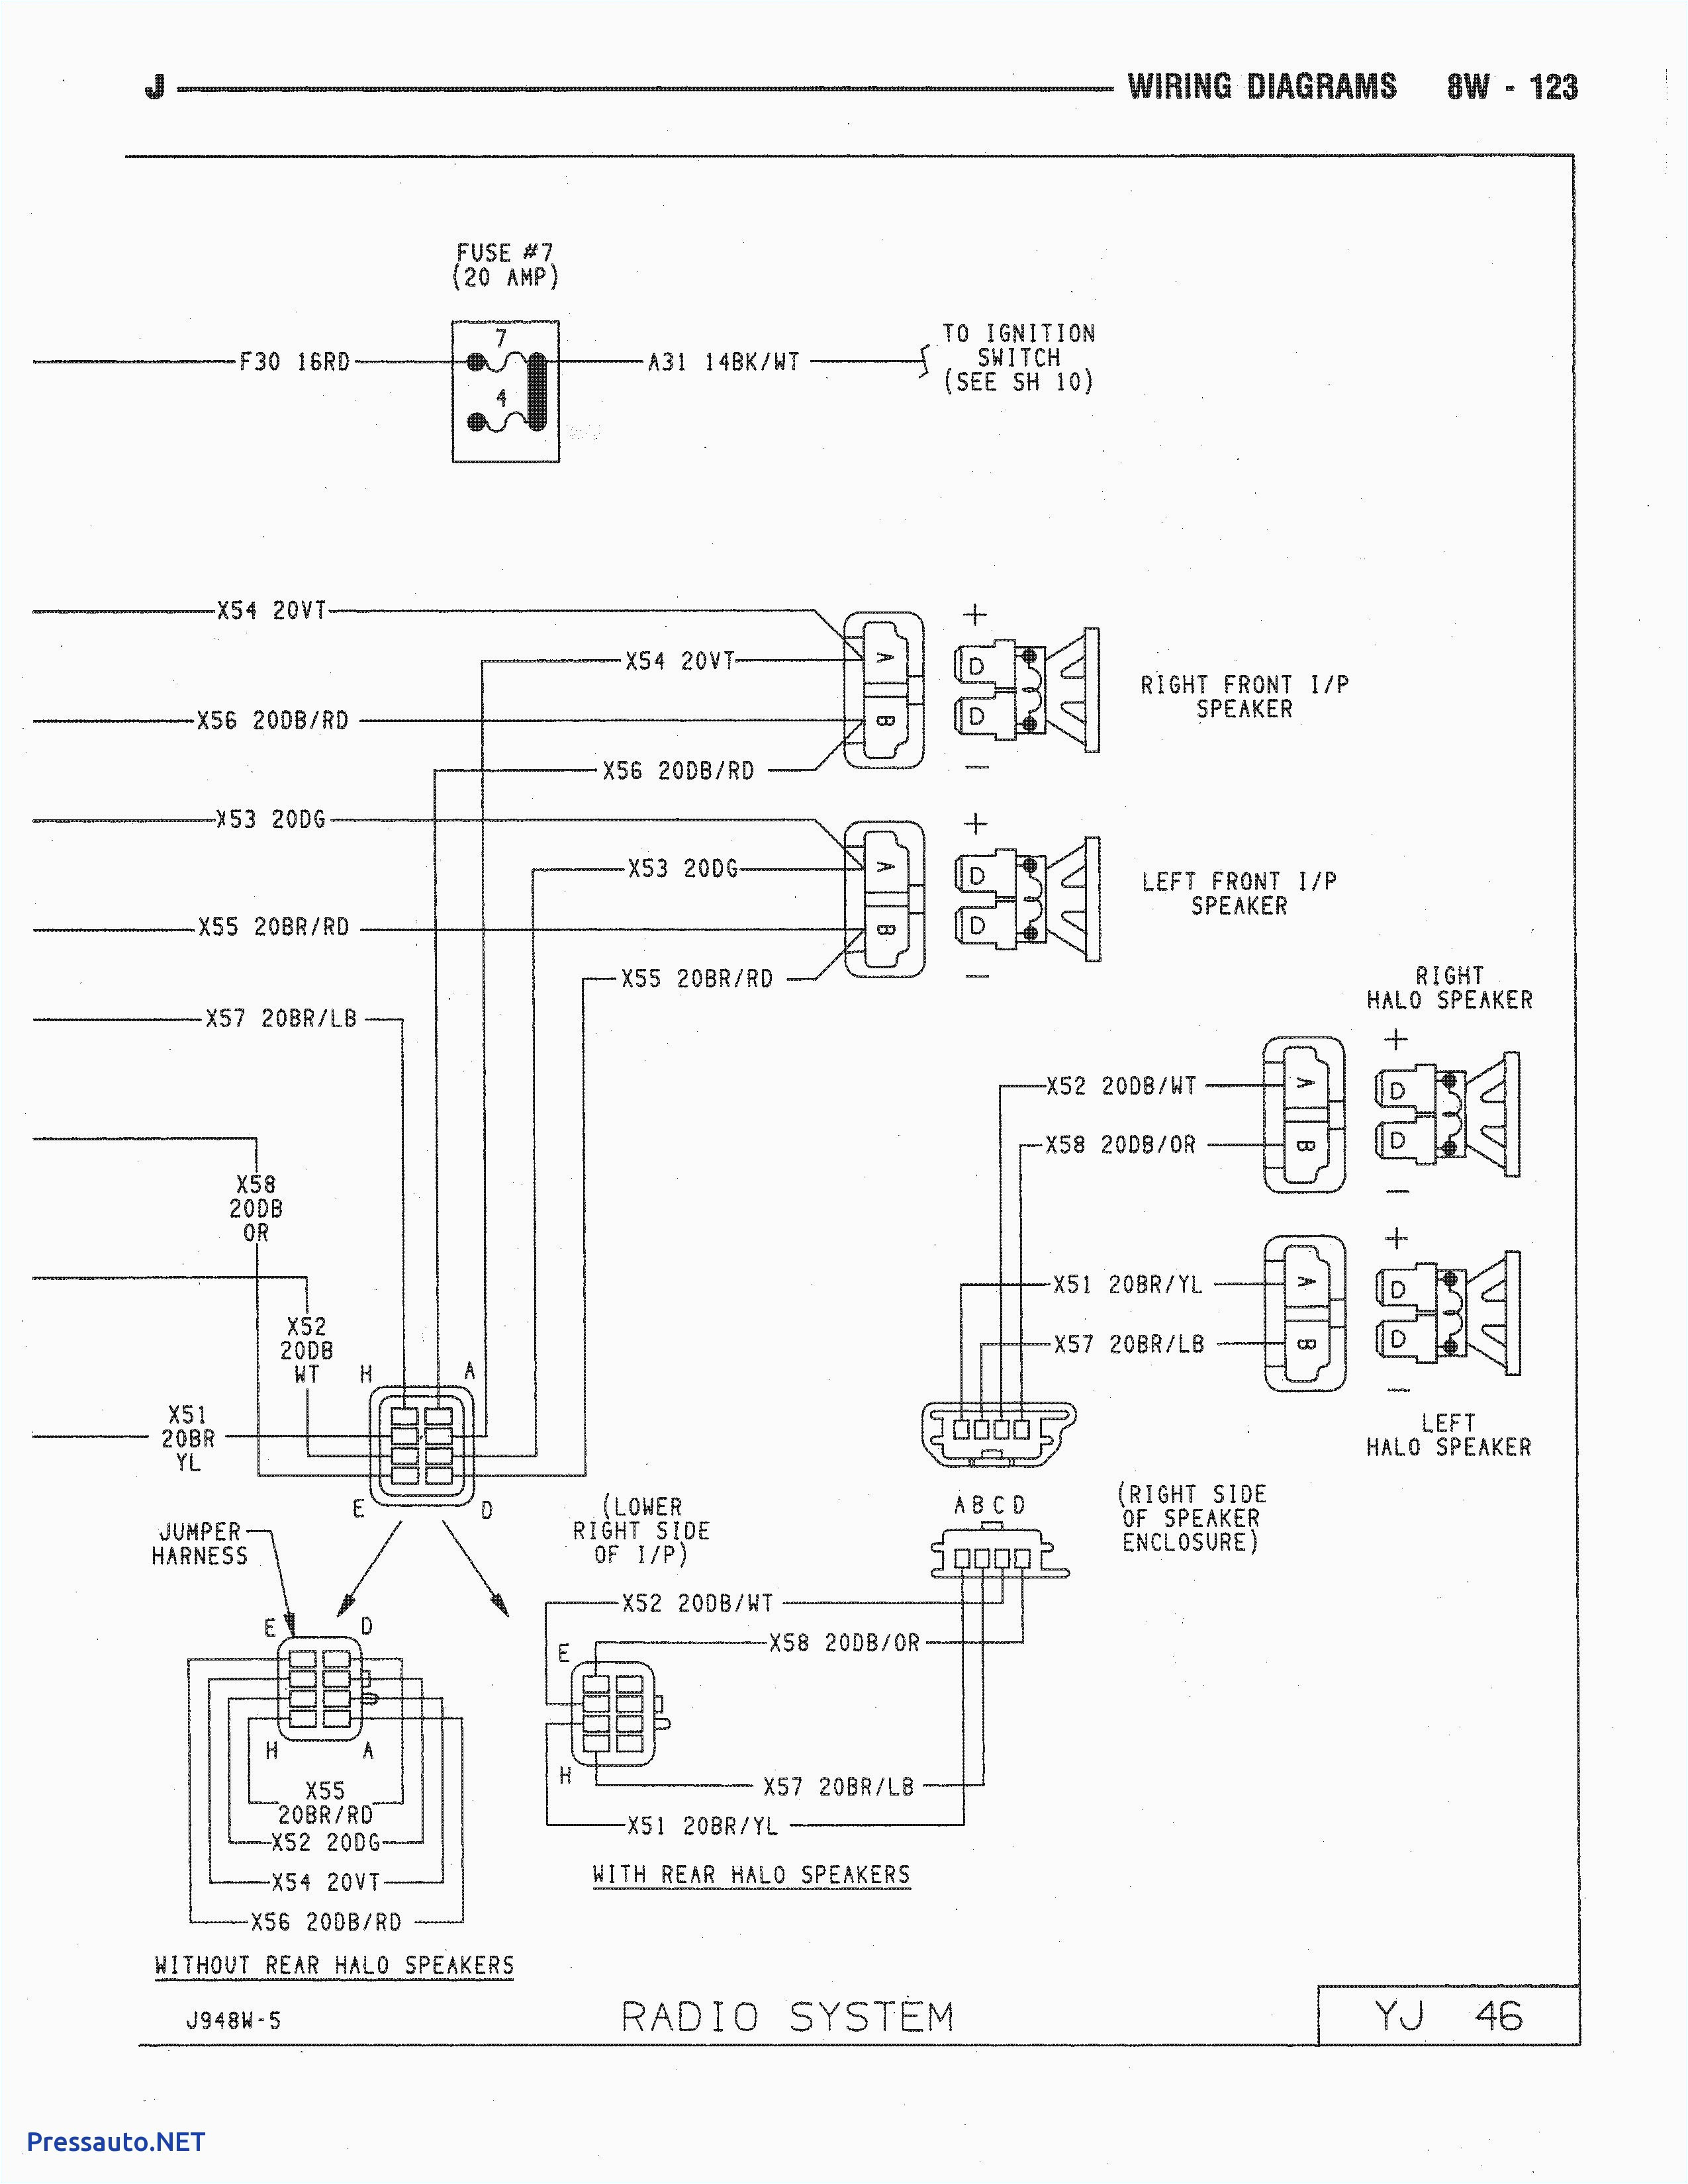 2006 jeep radio wiring diagram wiring diagram new2006 wrangler wiring diagram wiring diagram for you 2006